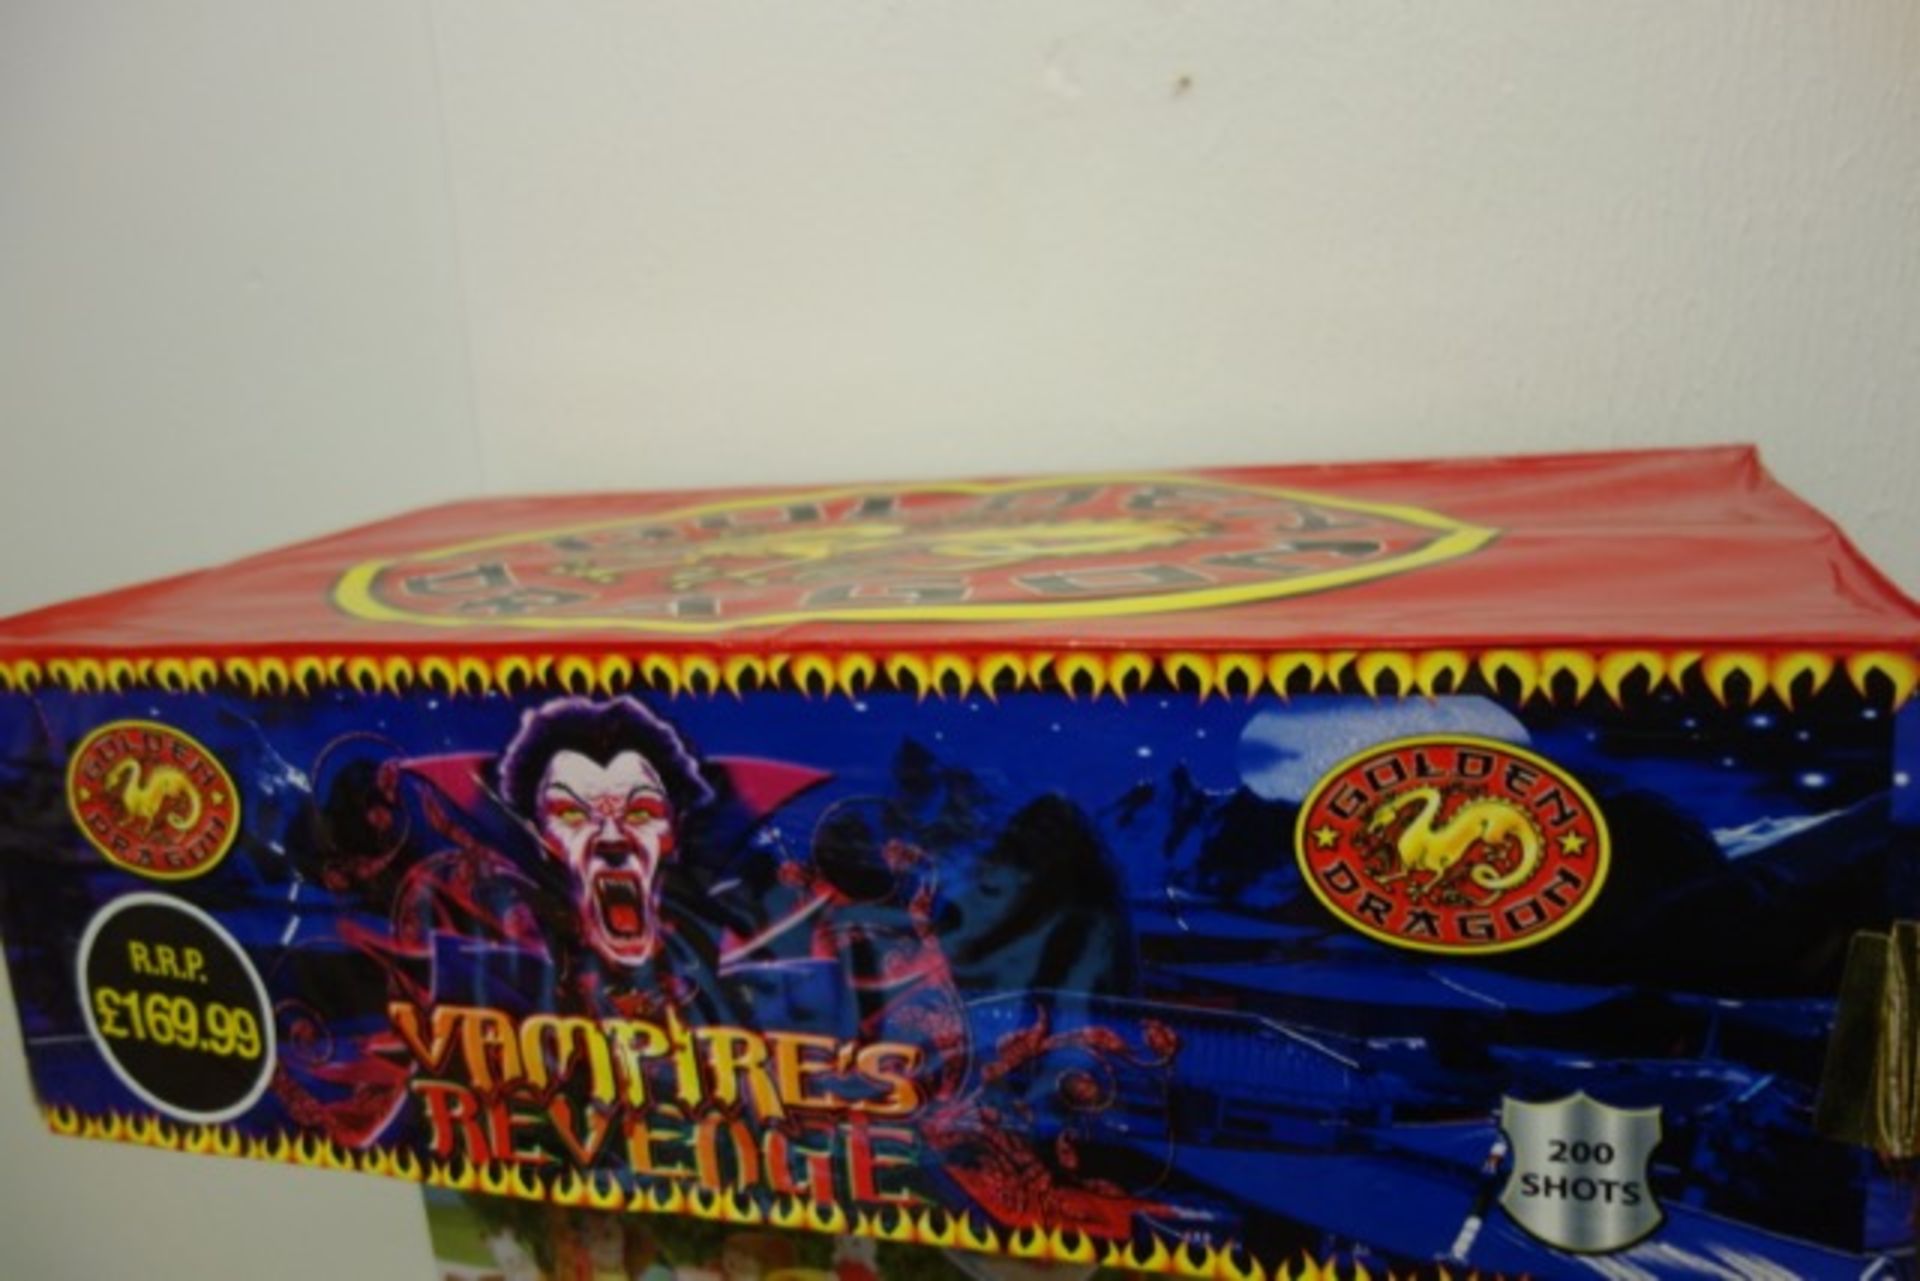 1 x Golden Dragon Fireworks - Vampires Revenge - 200 Shot Cake - Price Marked at £169.99. A 200 shot - Image 2 of 2